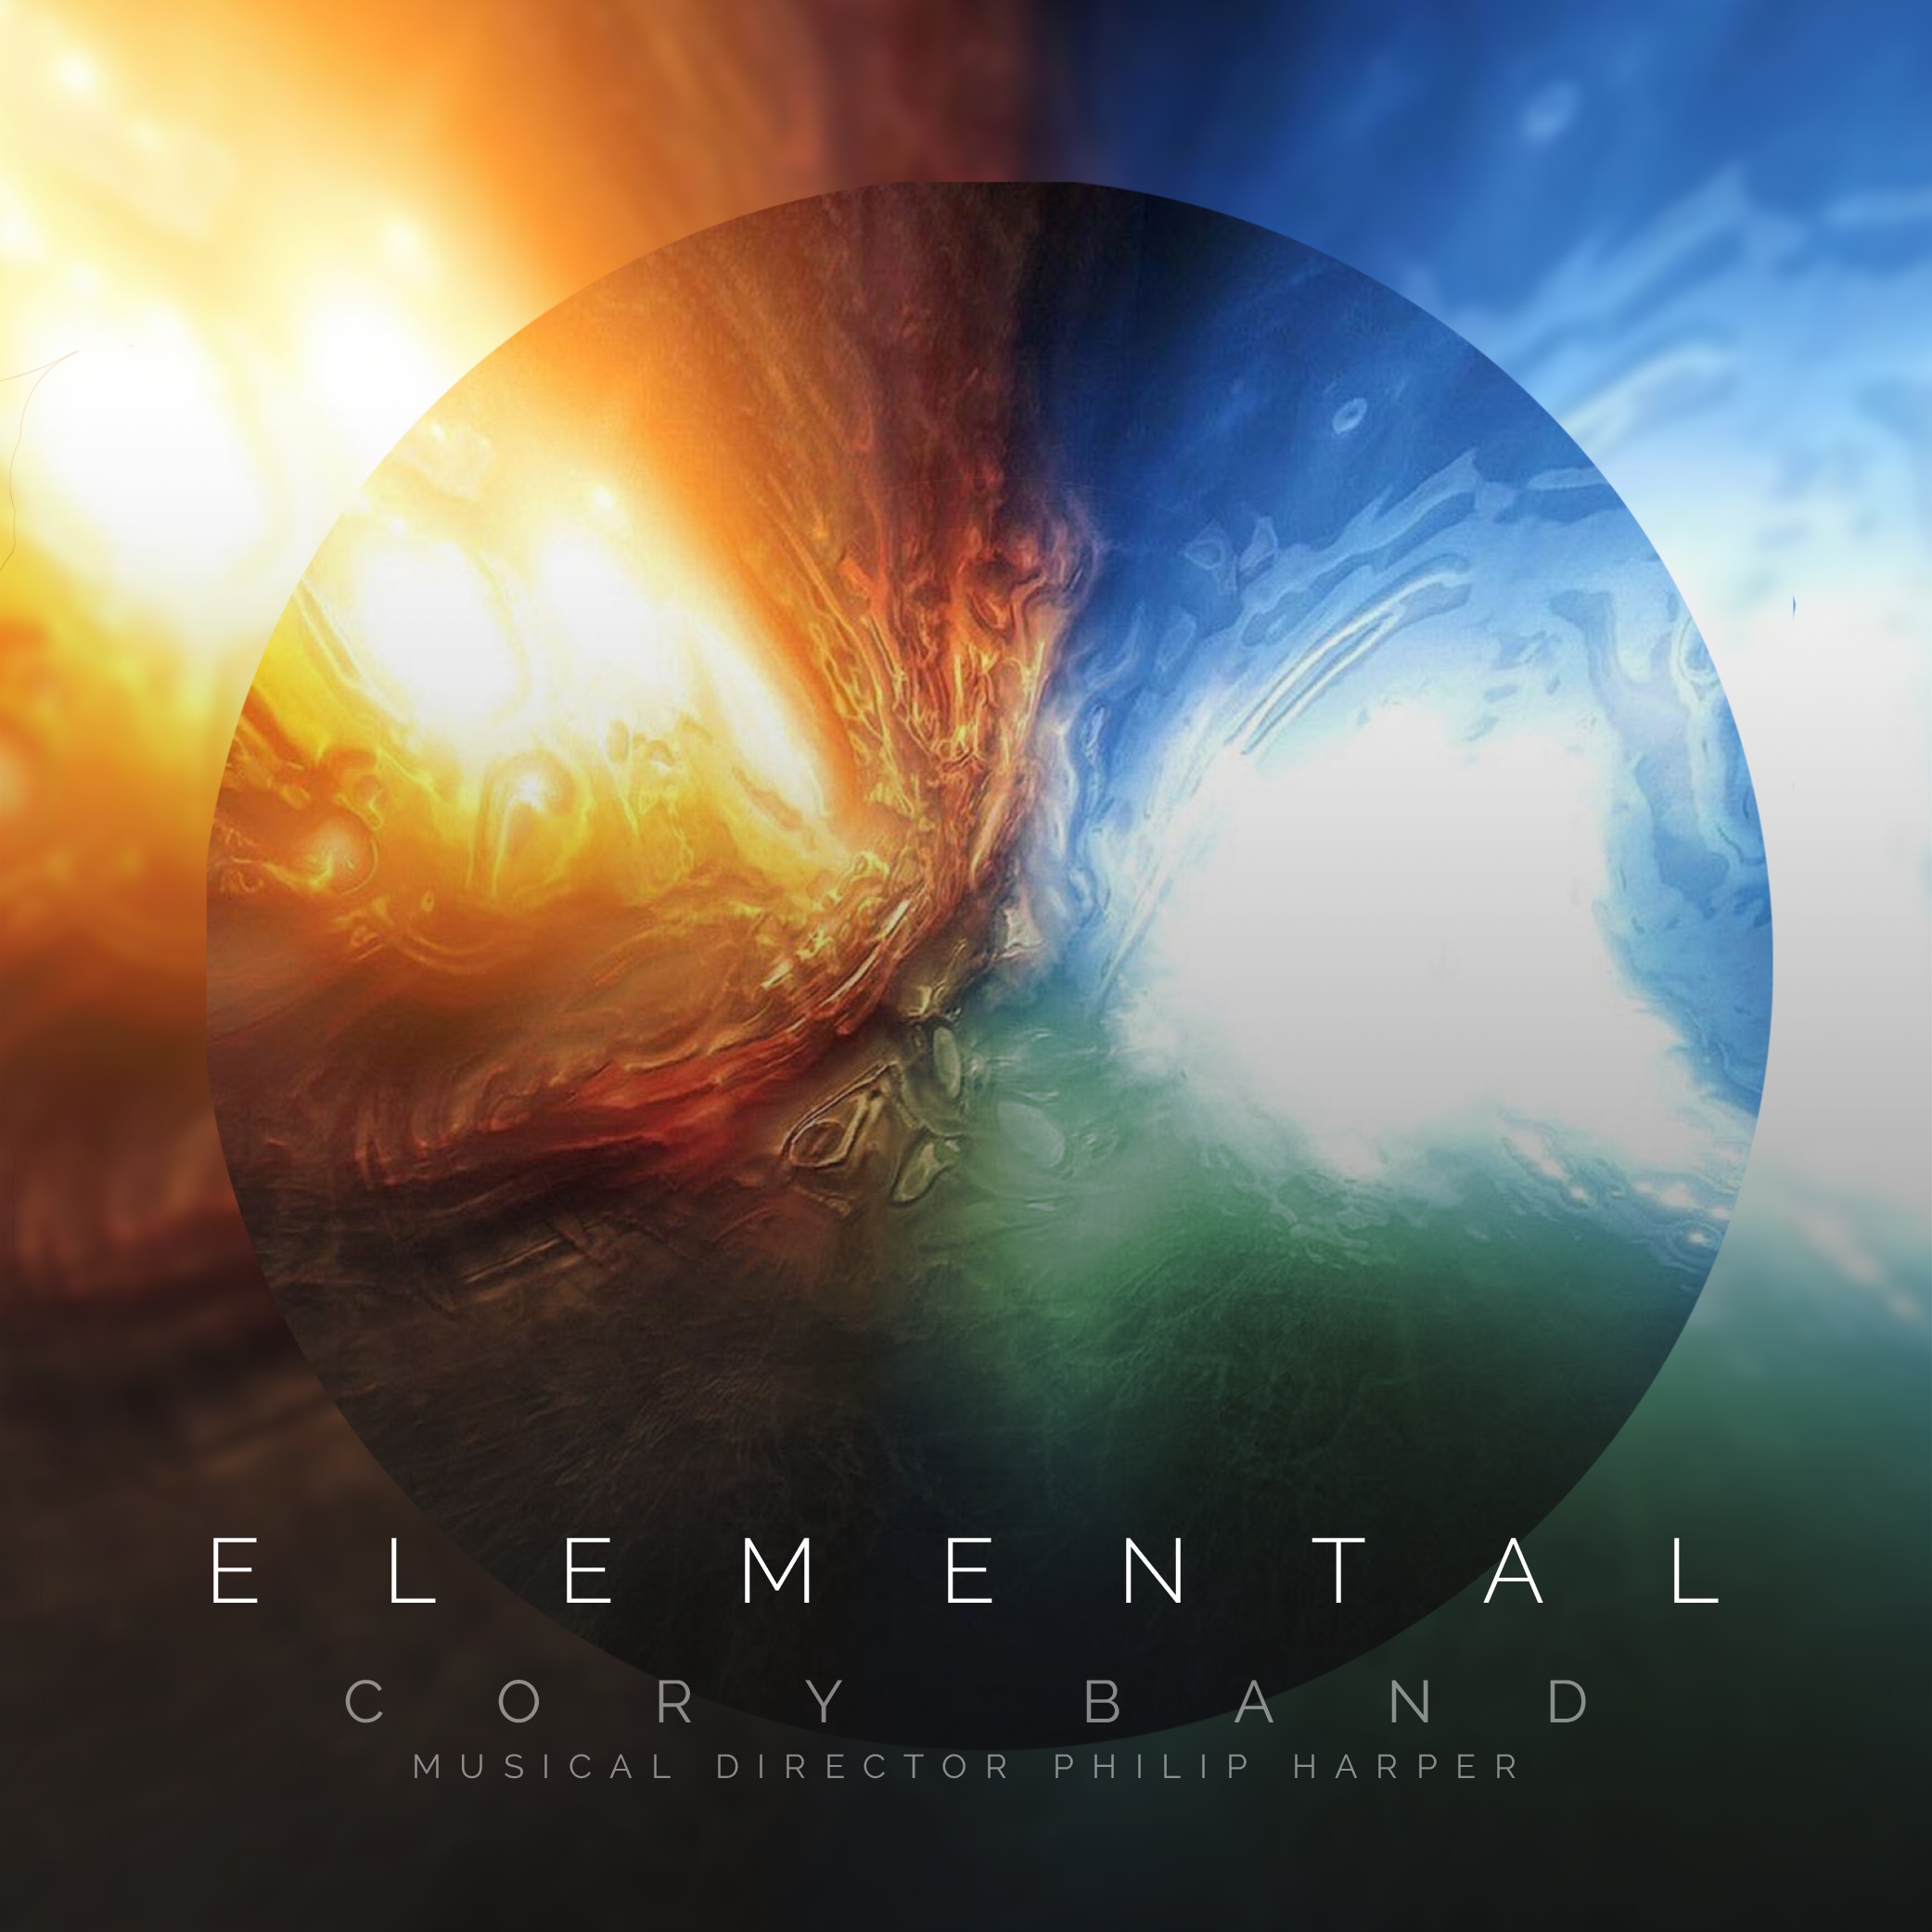 Elemental - CD